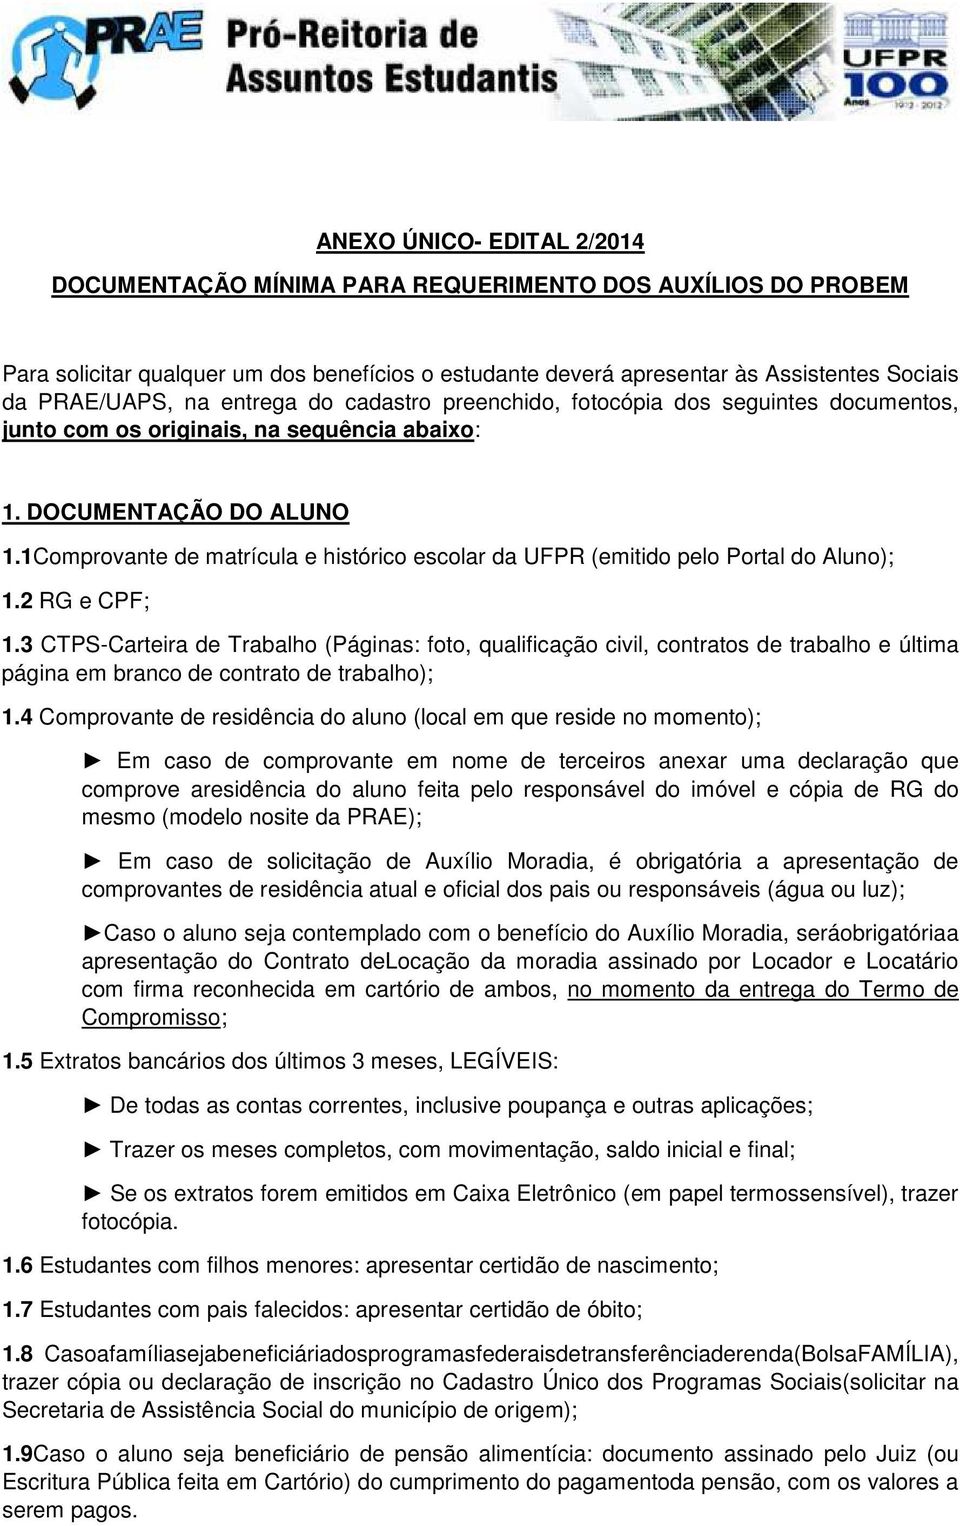 1Comprovante de matrícula e histórico escolar da UFPR (emitido pelo Portal do Aluno); 1.2 RG e CPF; 1.